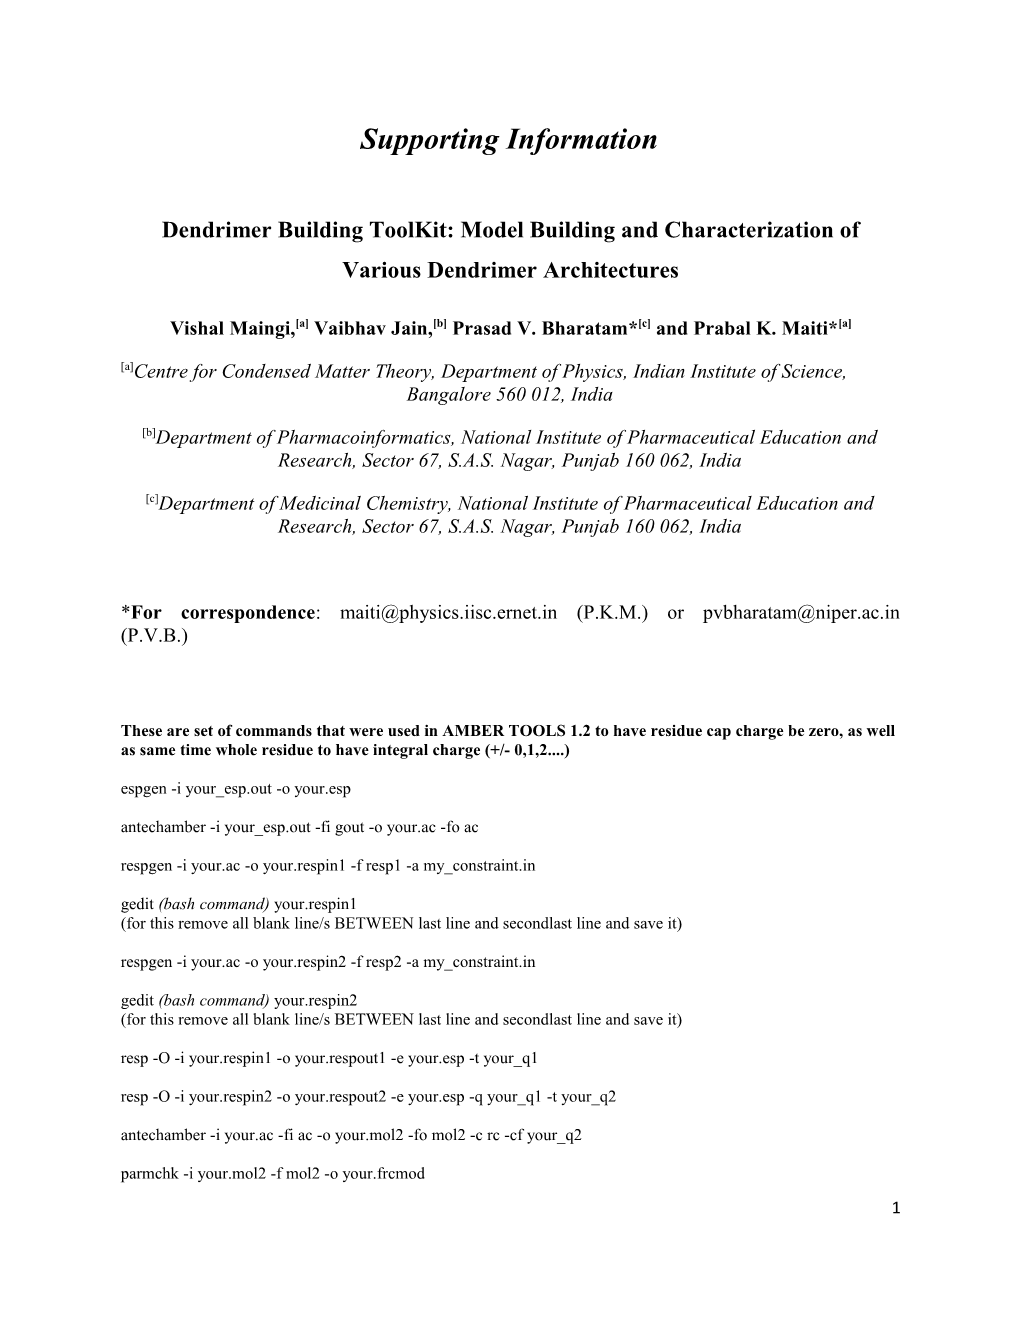 Dendrimer Building Toolkit: Model Building and Characterization of Various Dendrimer